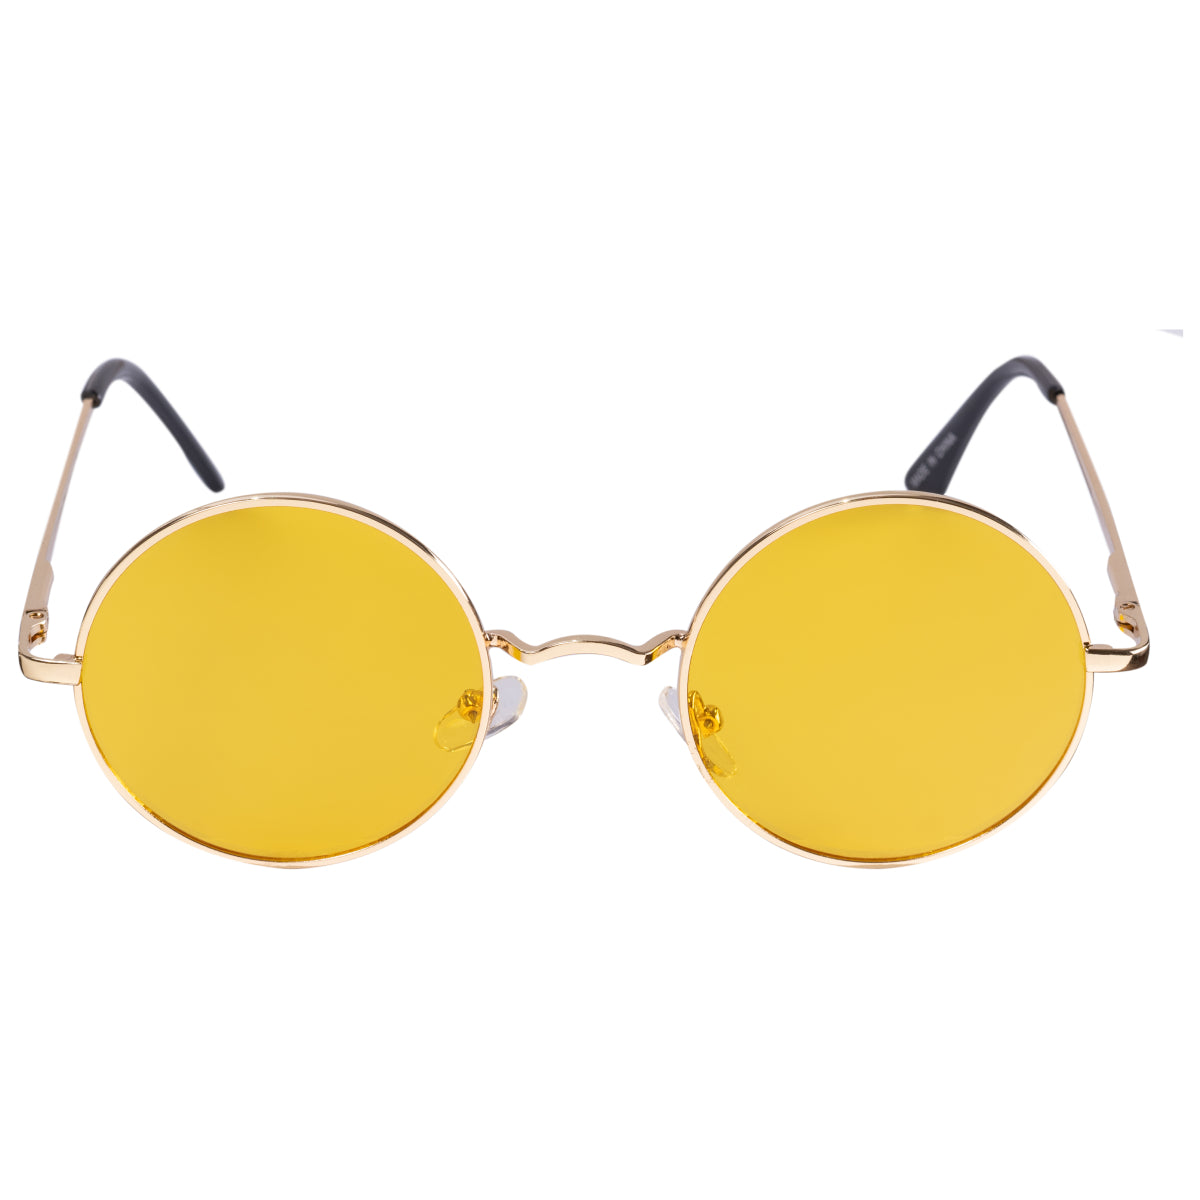 John Lennon Vintage Round Sunglasses Costume Accessory - Yellow